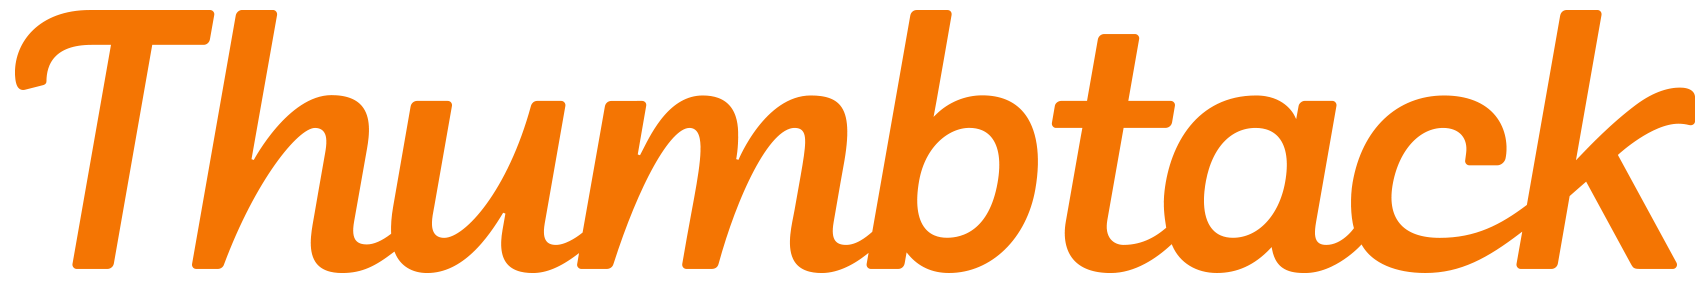 Thumbtack Logo - Thumbtack Competitors, Revenue and Employees - Owler Company Profile